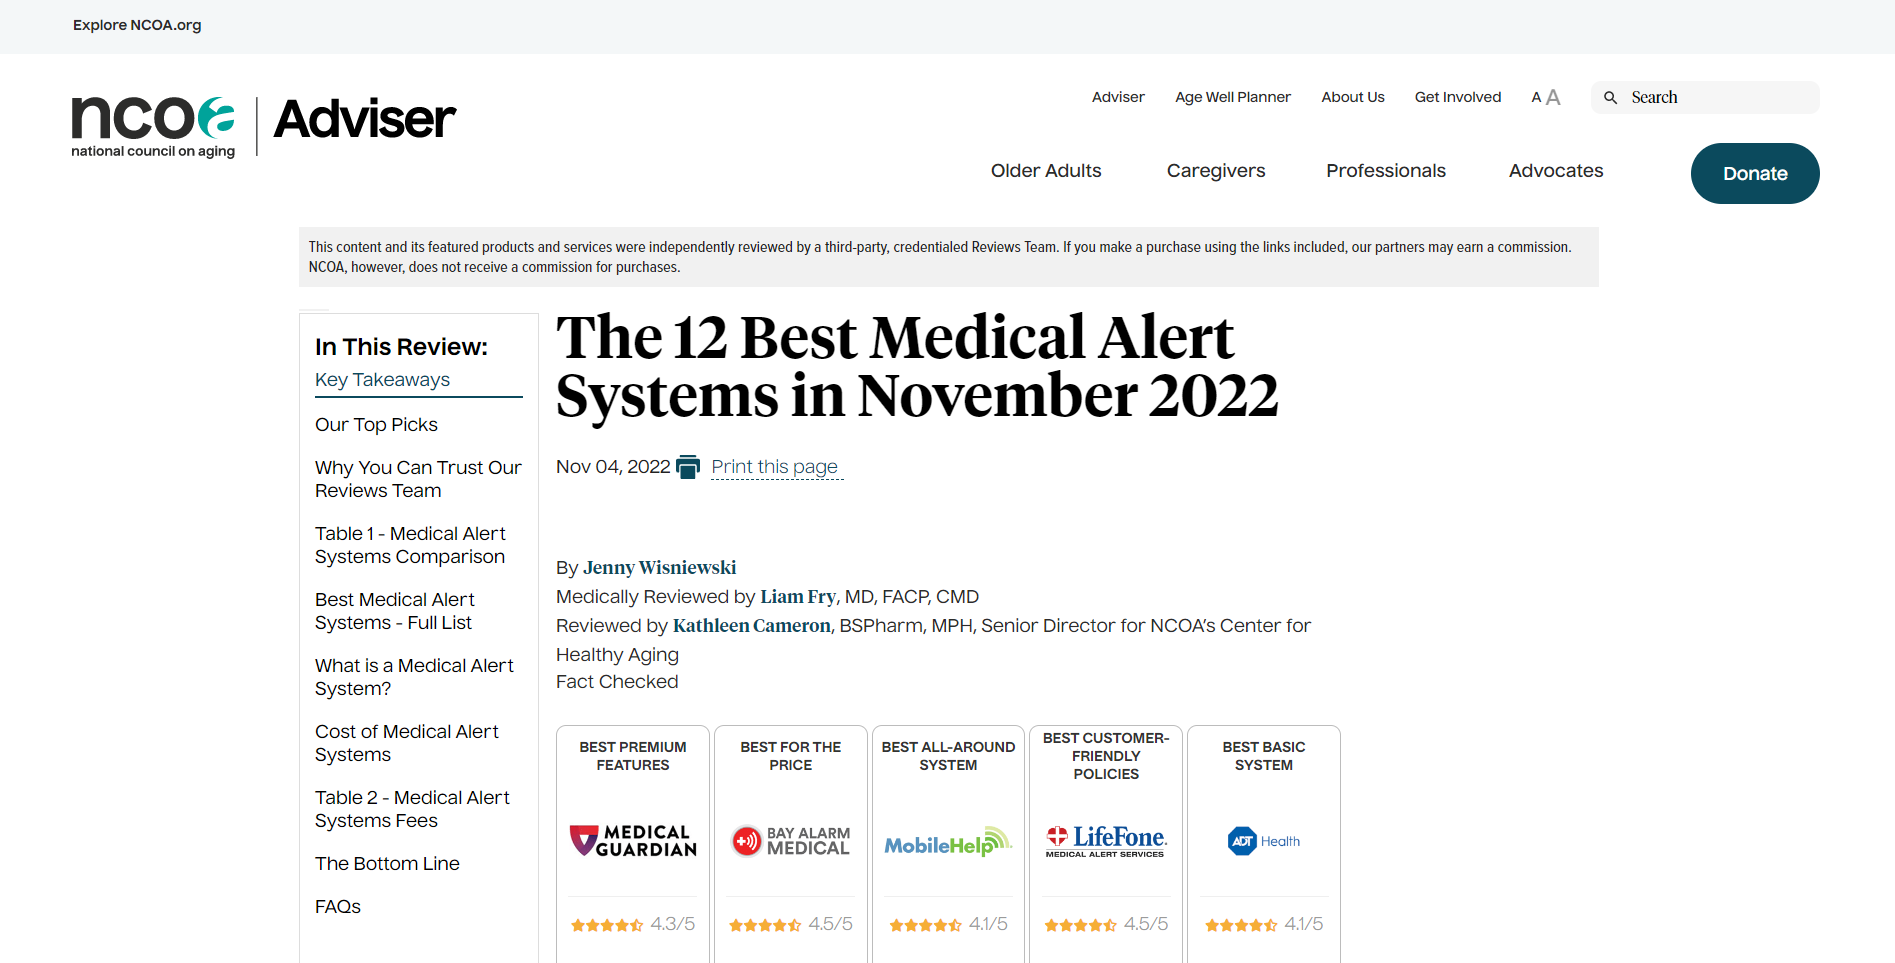 The 12 Best Medical Alert Systems in November 2022